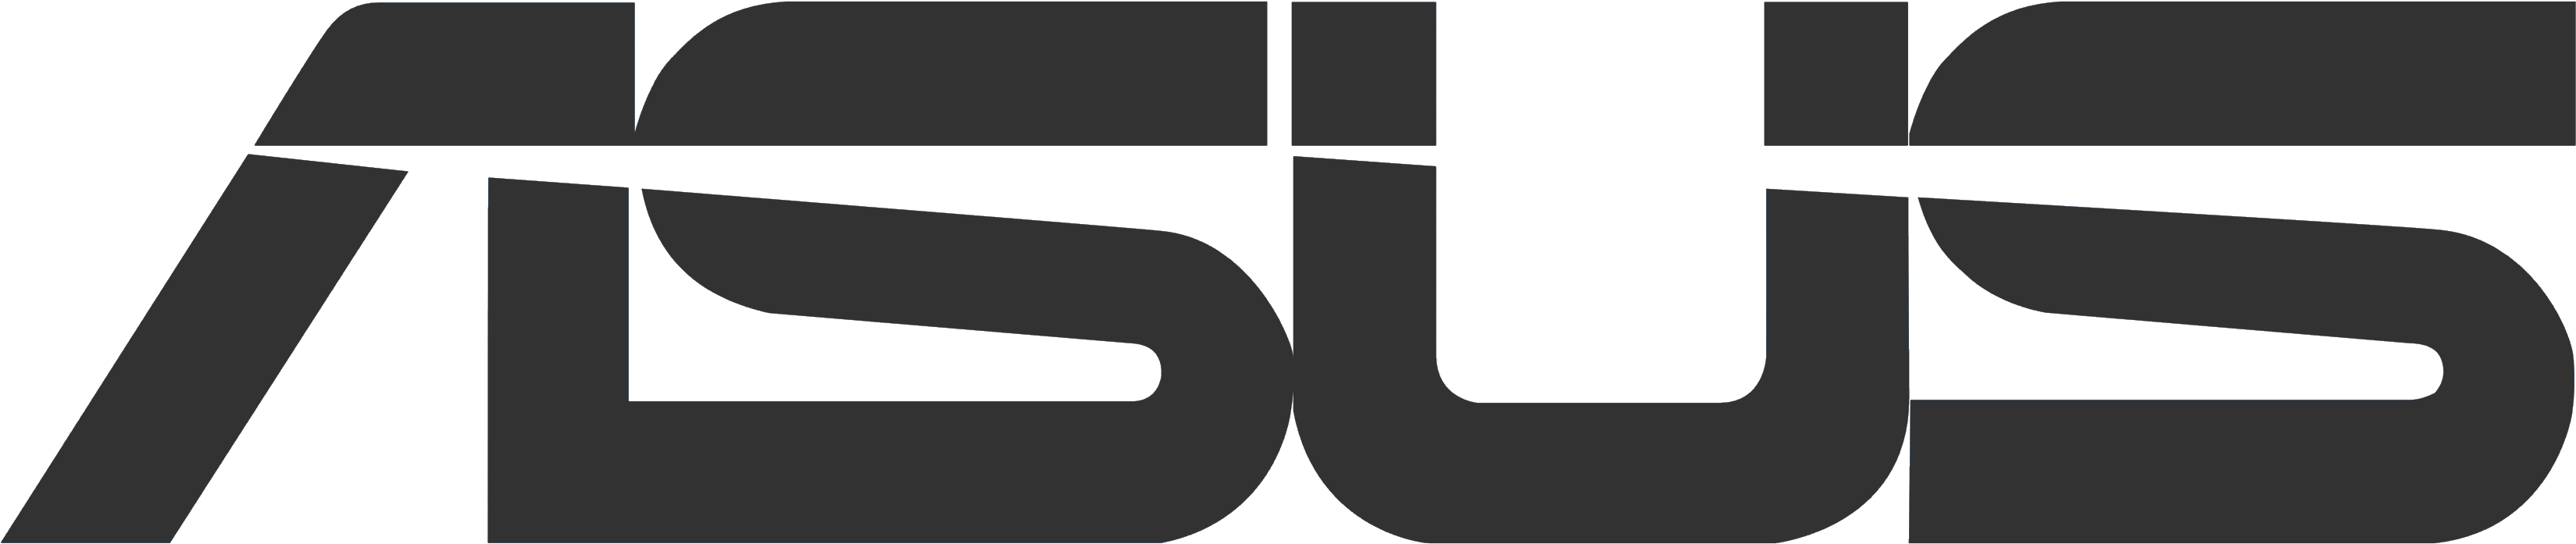 Asus Logo Hd Photo - Asus Logo (3570x880), Png Download